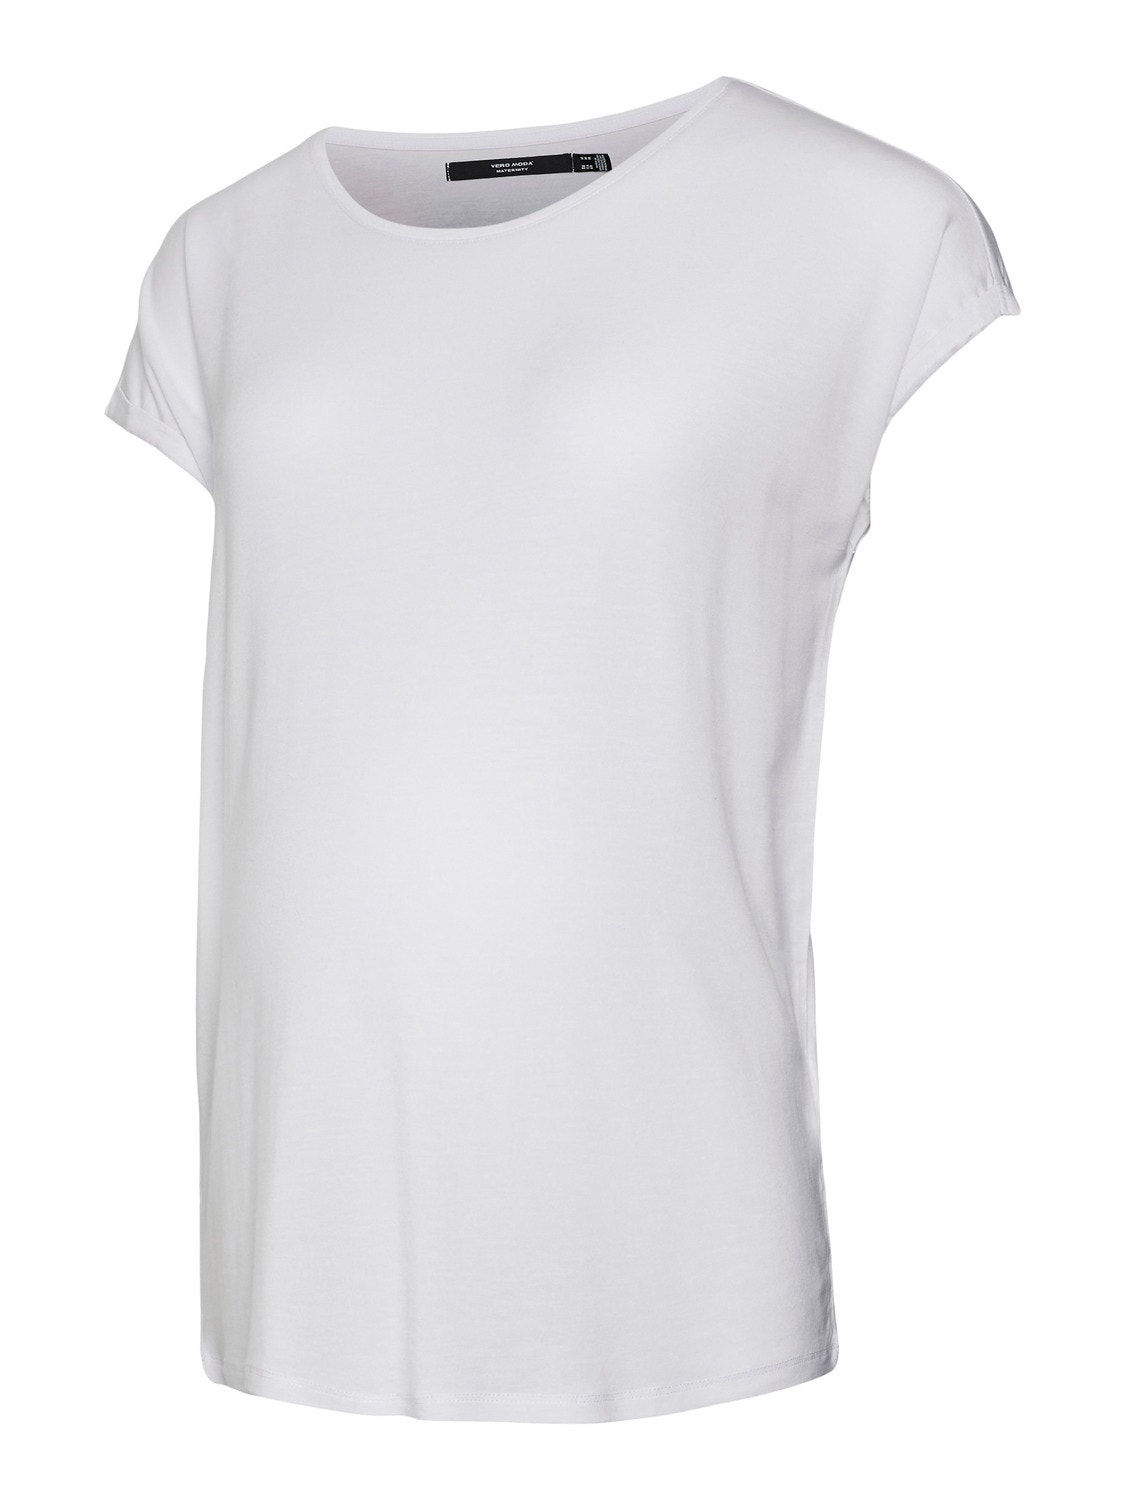 MAMA.LICIOUS Krój regularny Okragly dekolt T-shirt -Bright White - 20015985